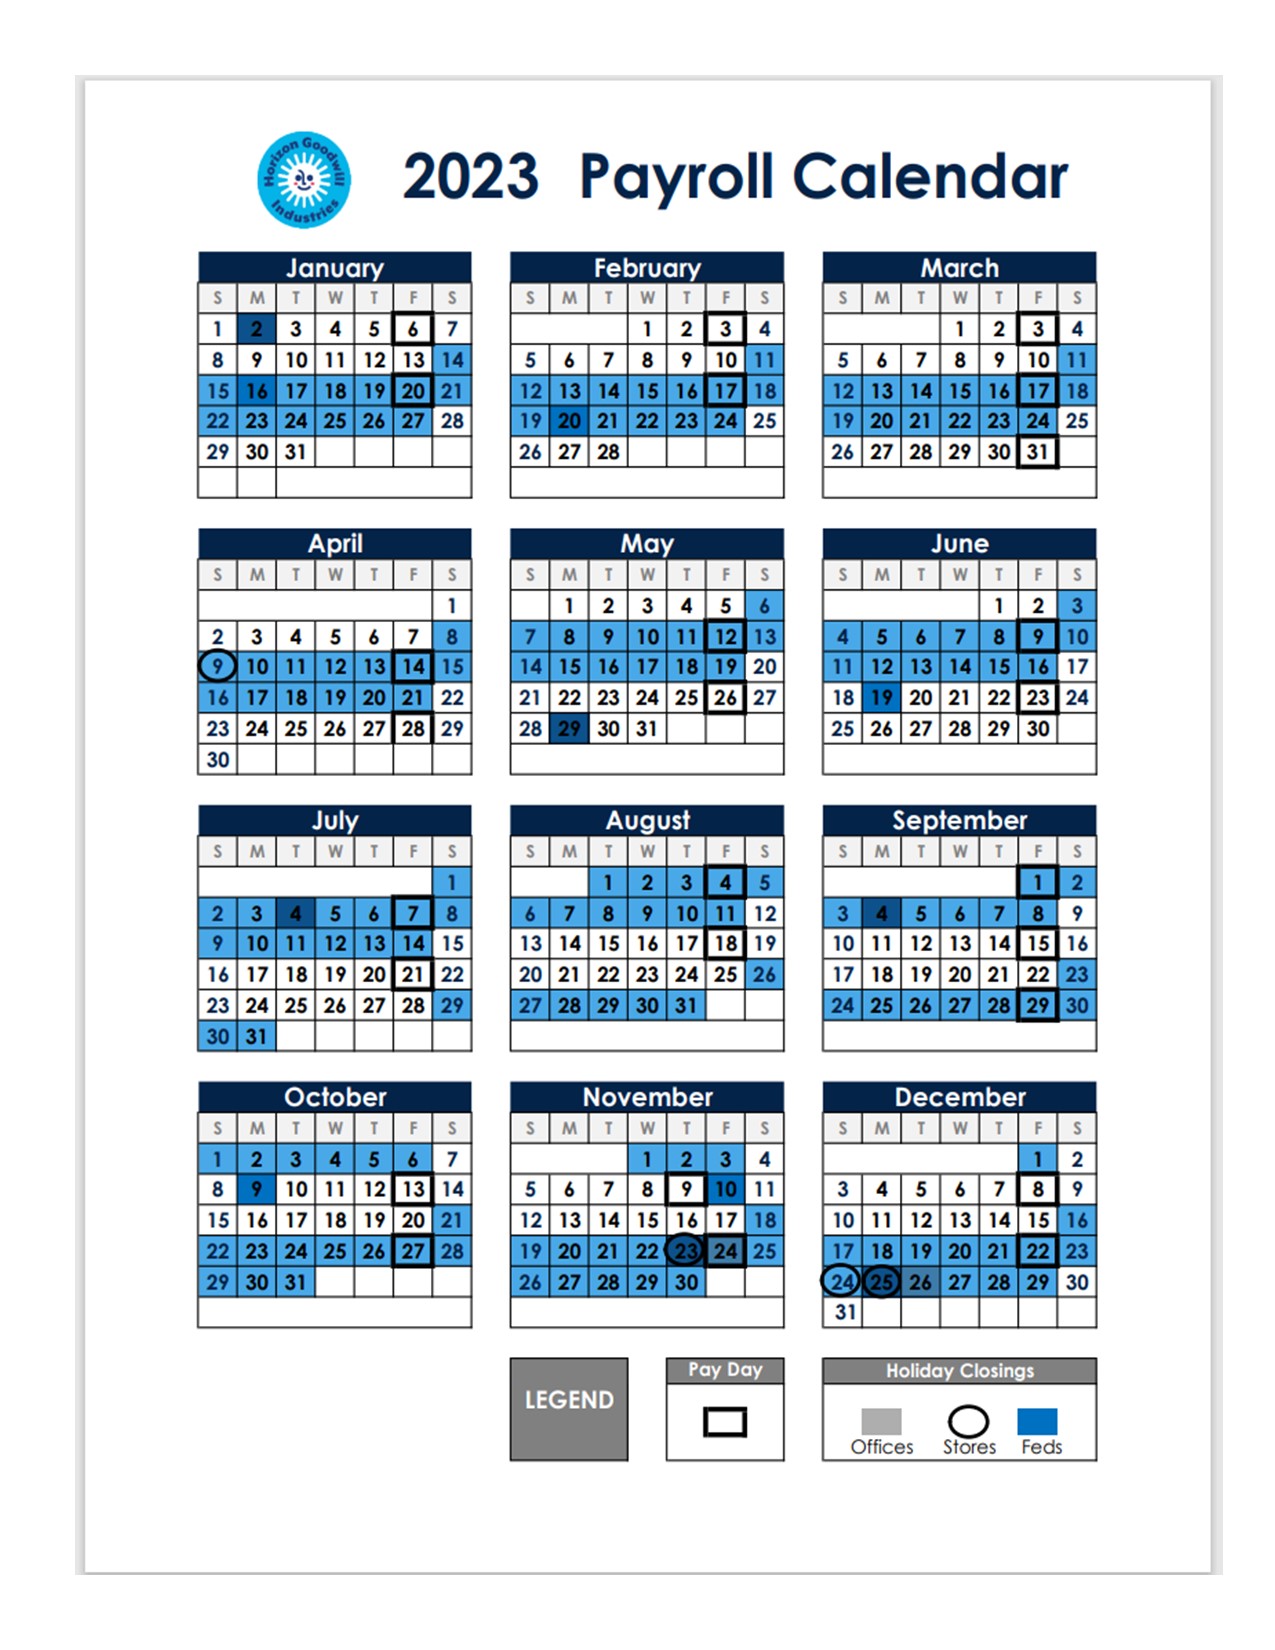 2023 Holiday Schedule and Payroll Calendar Horizon Goodwill Industries